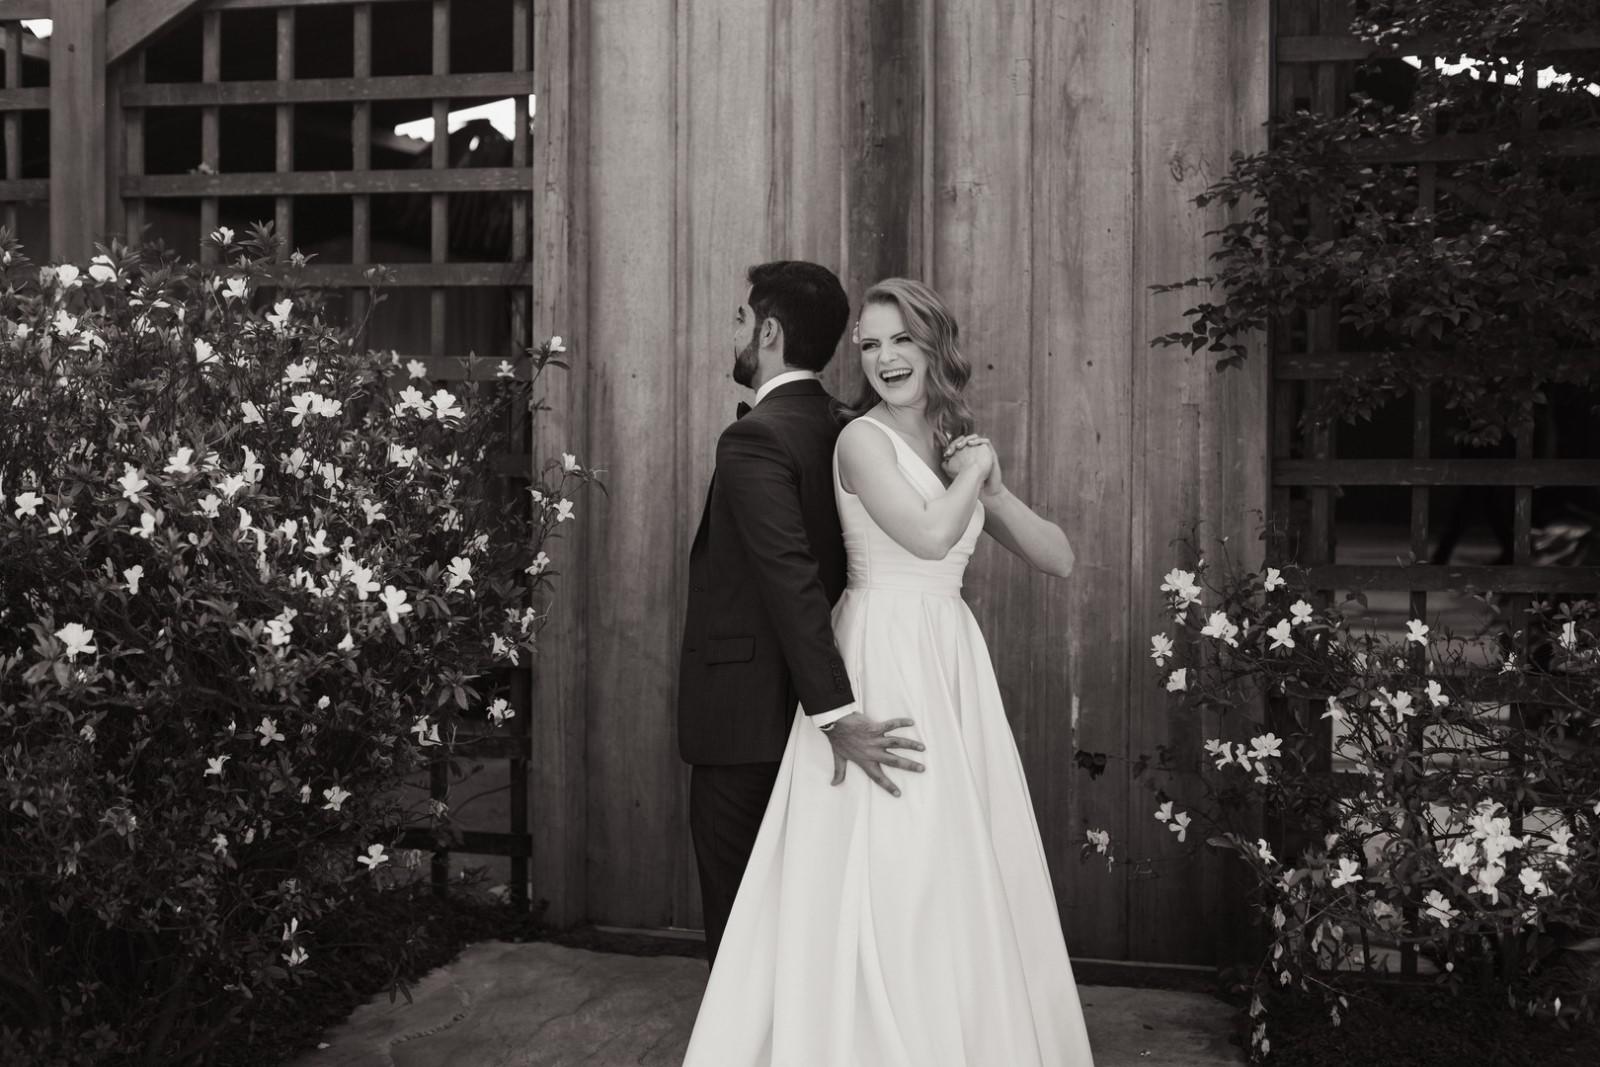 Thales and Ingrid's wedding photo shoot, black and white wedding photography